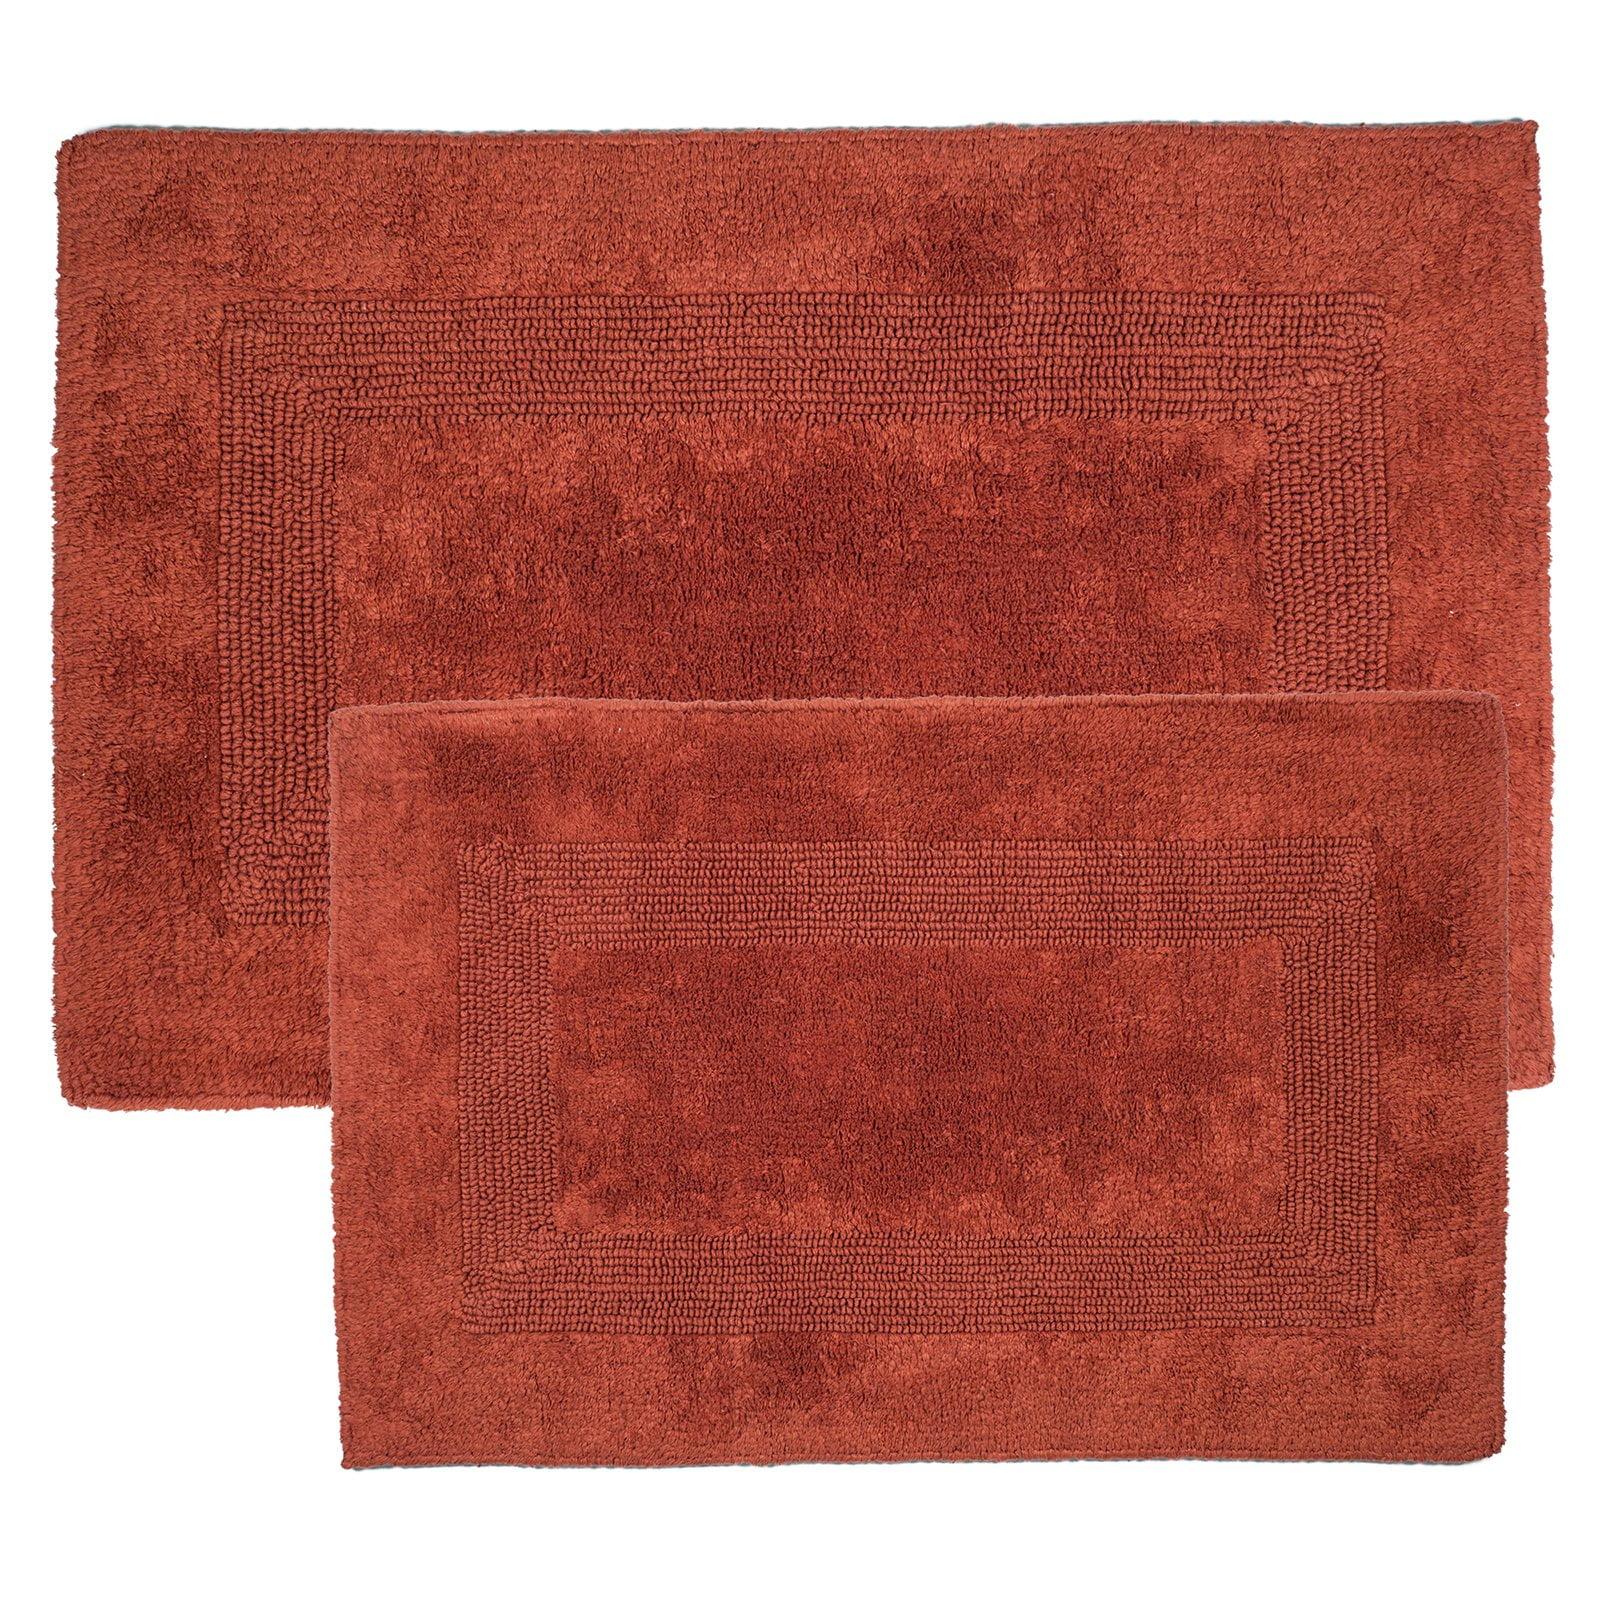 Brick Red Egyptian Cotton Luxurious 2-Piece Bath Rug Set